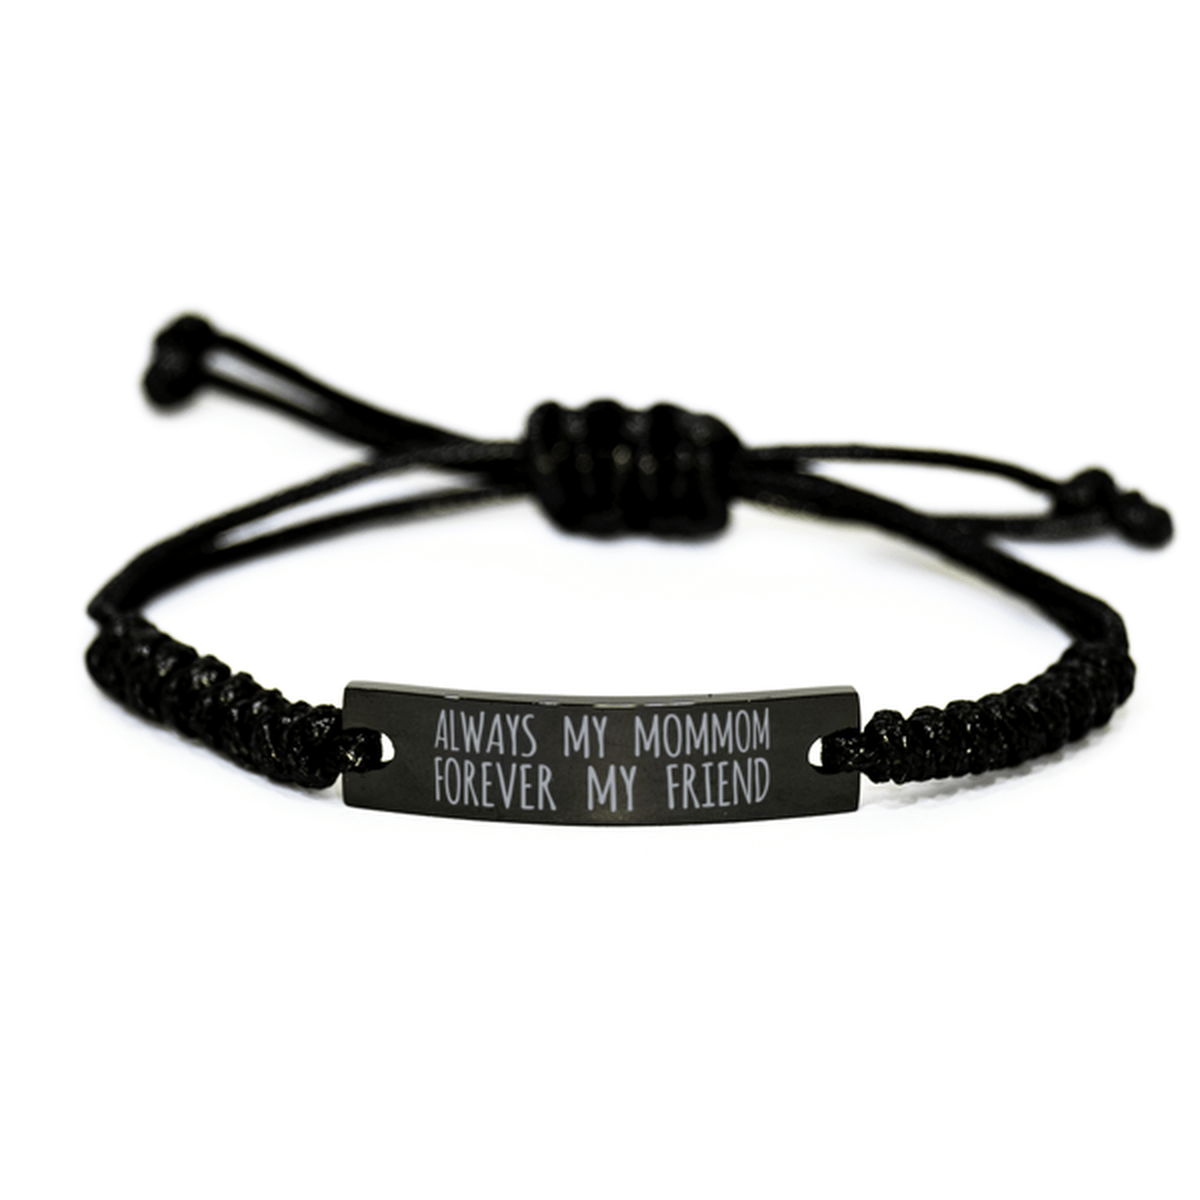 Inspirational Mommom Black Rope Bracelet, Always My Mommom Forever My Friend, Best Birthday Gifts For Family